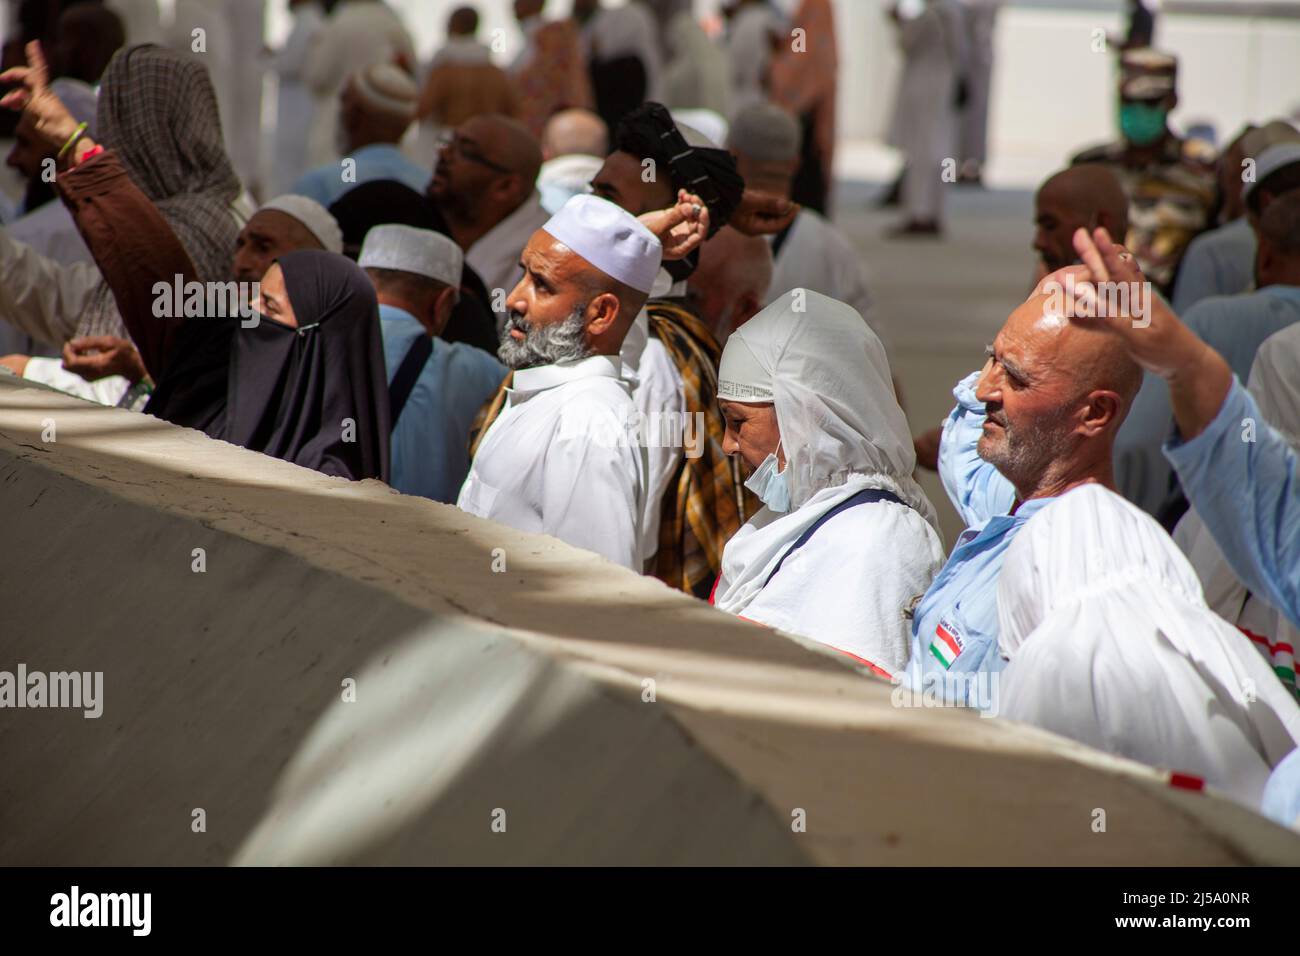 pilgrims performing the stoning ritual during Hajj season in Makkah Saudi Arabia Stock Photo